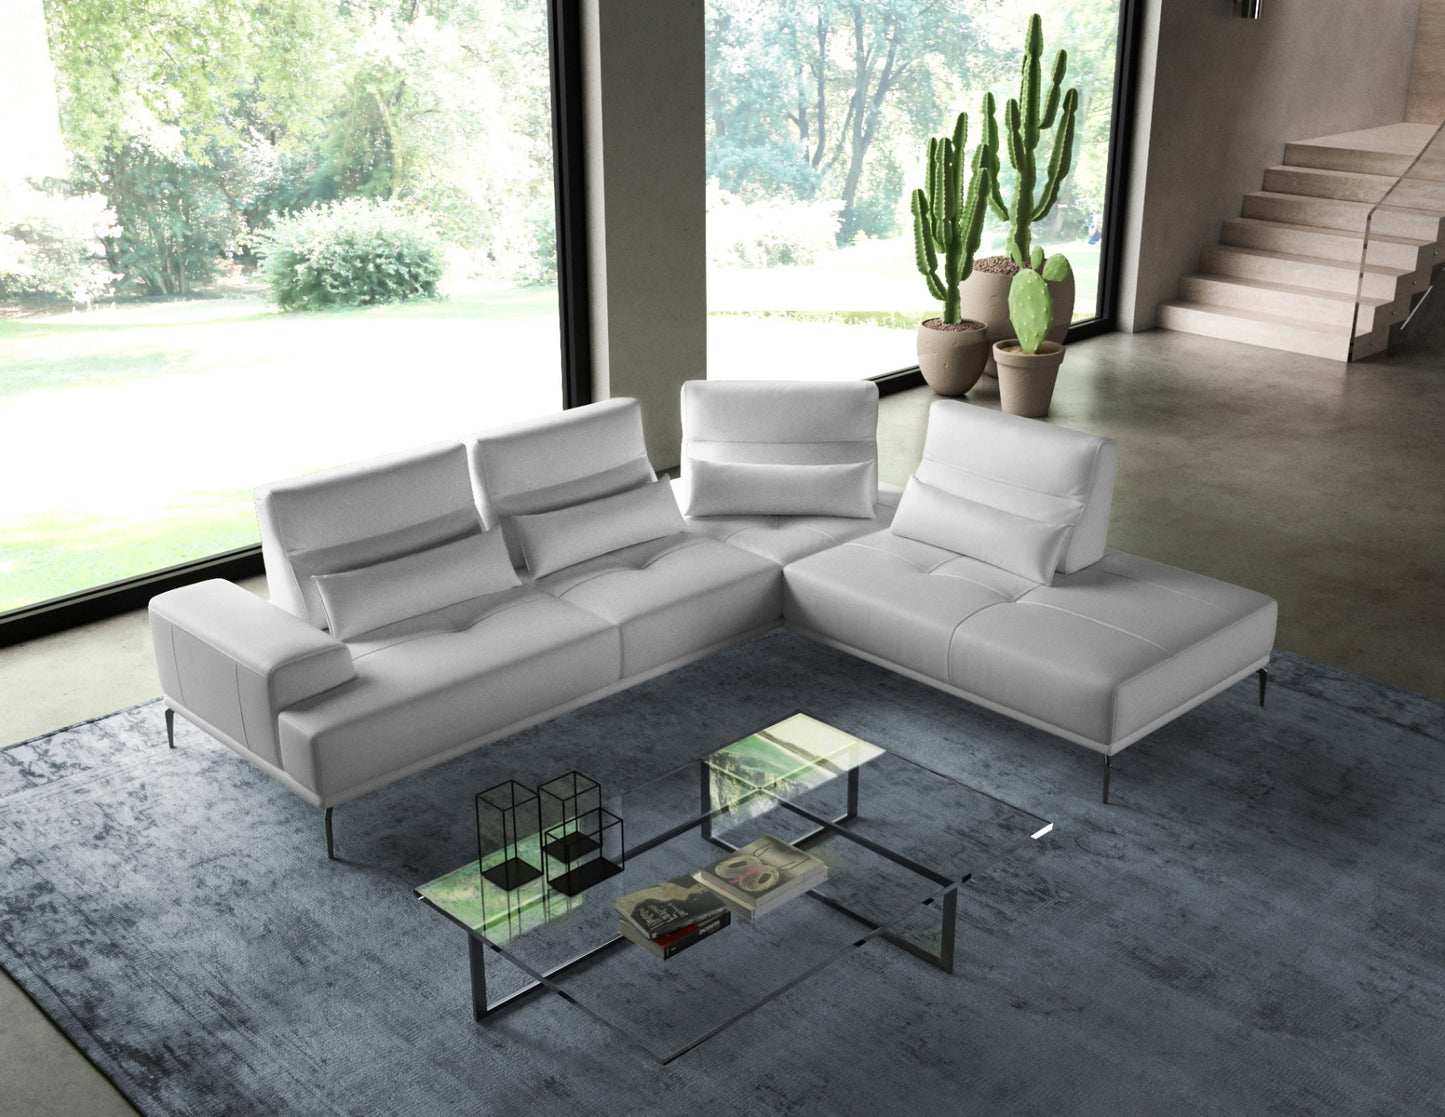 VIG Furniture Coronelli Sunset Italian White Leather Right Sectional Sofa